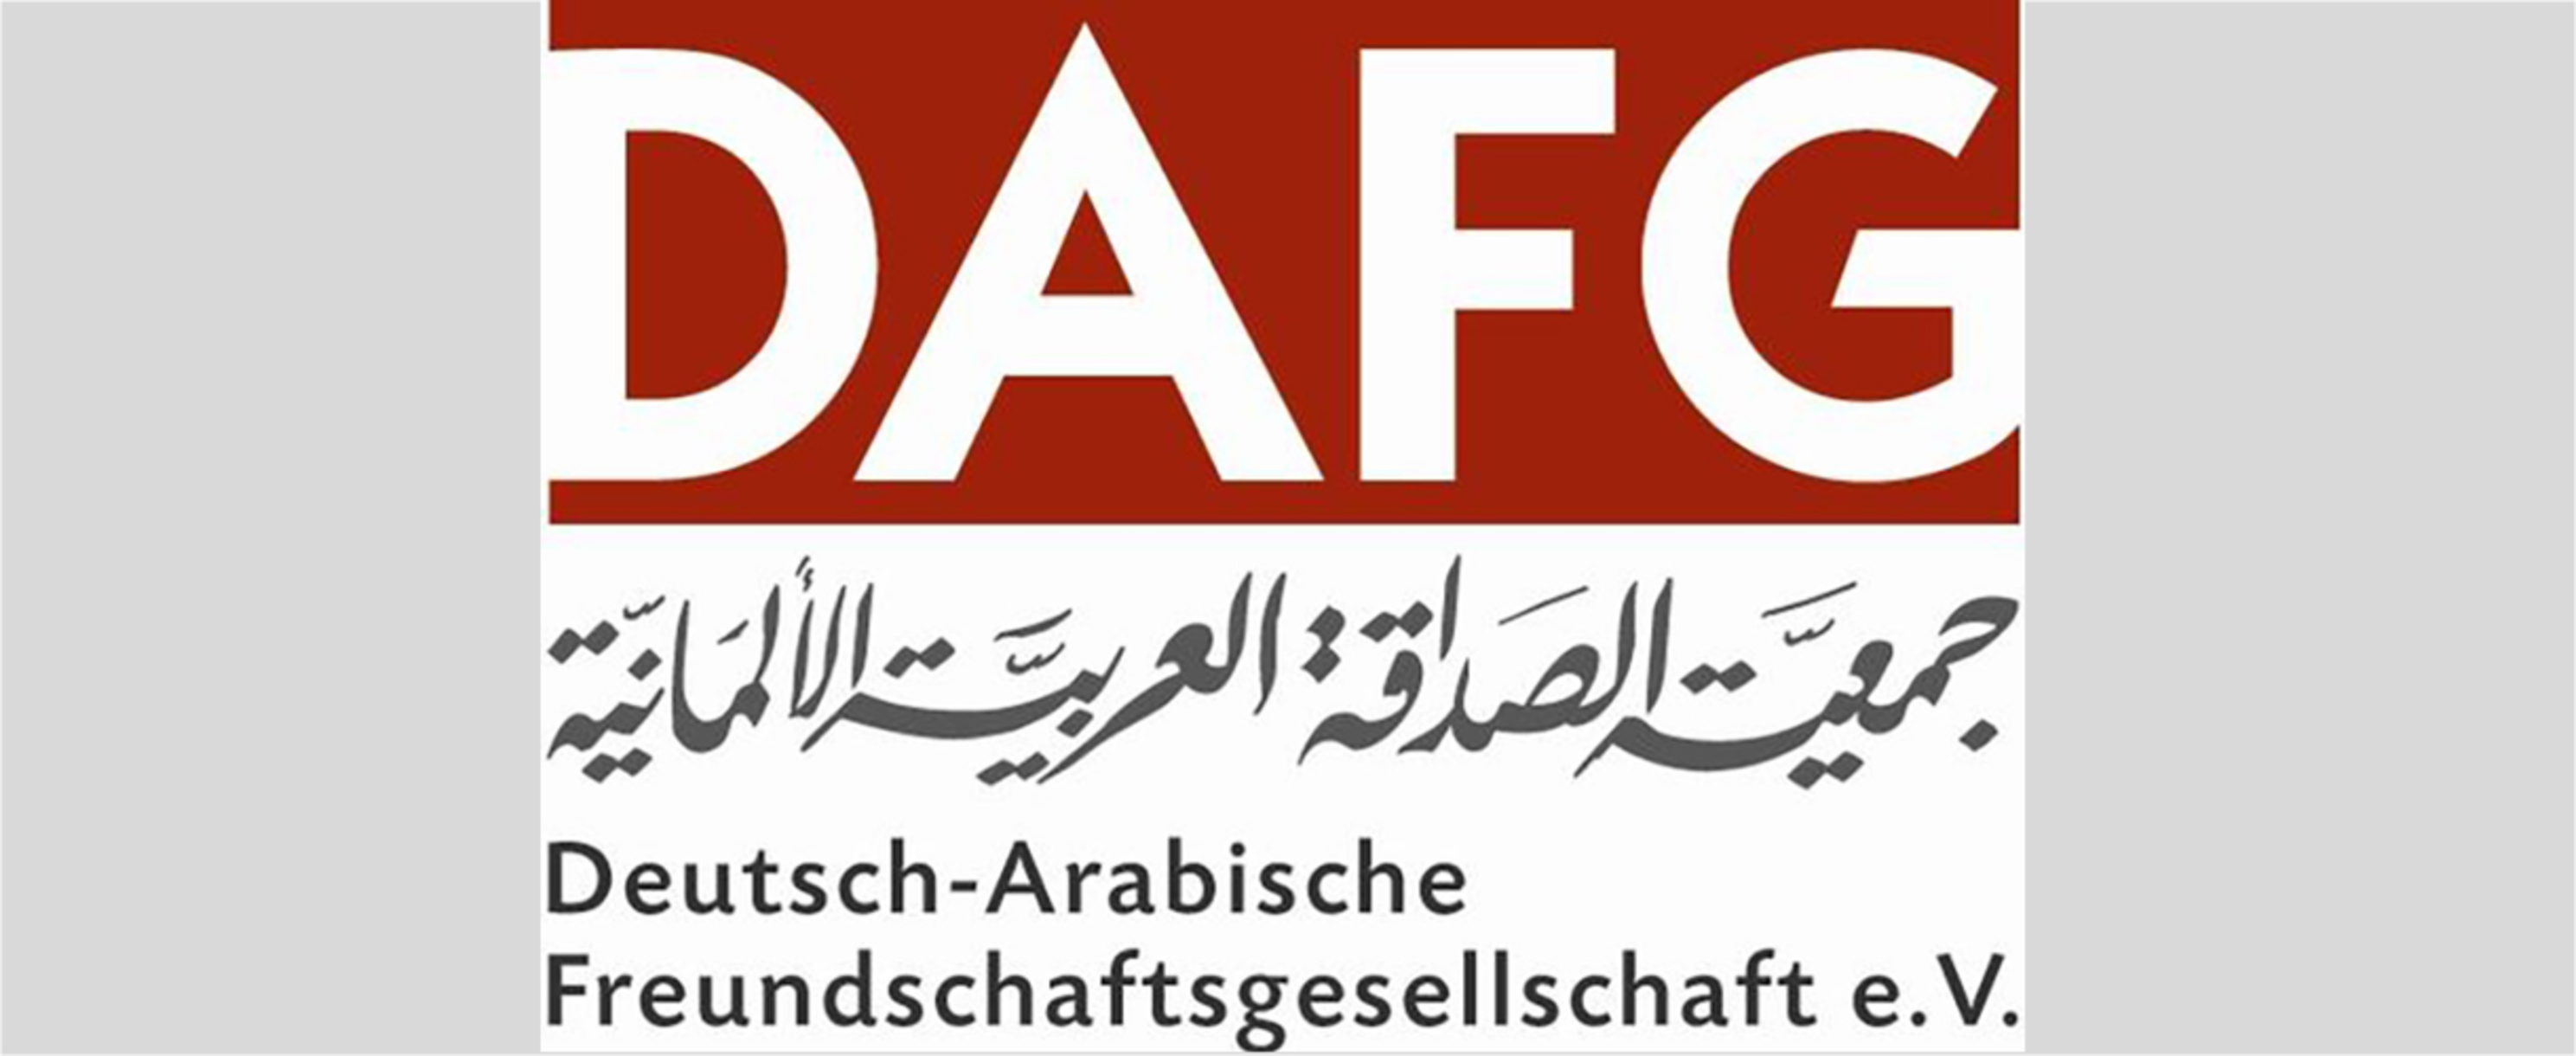 DAFG - Deutsch Arabische Freundschaftsgesellschaft - Berlin